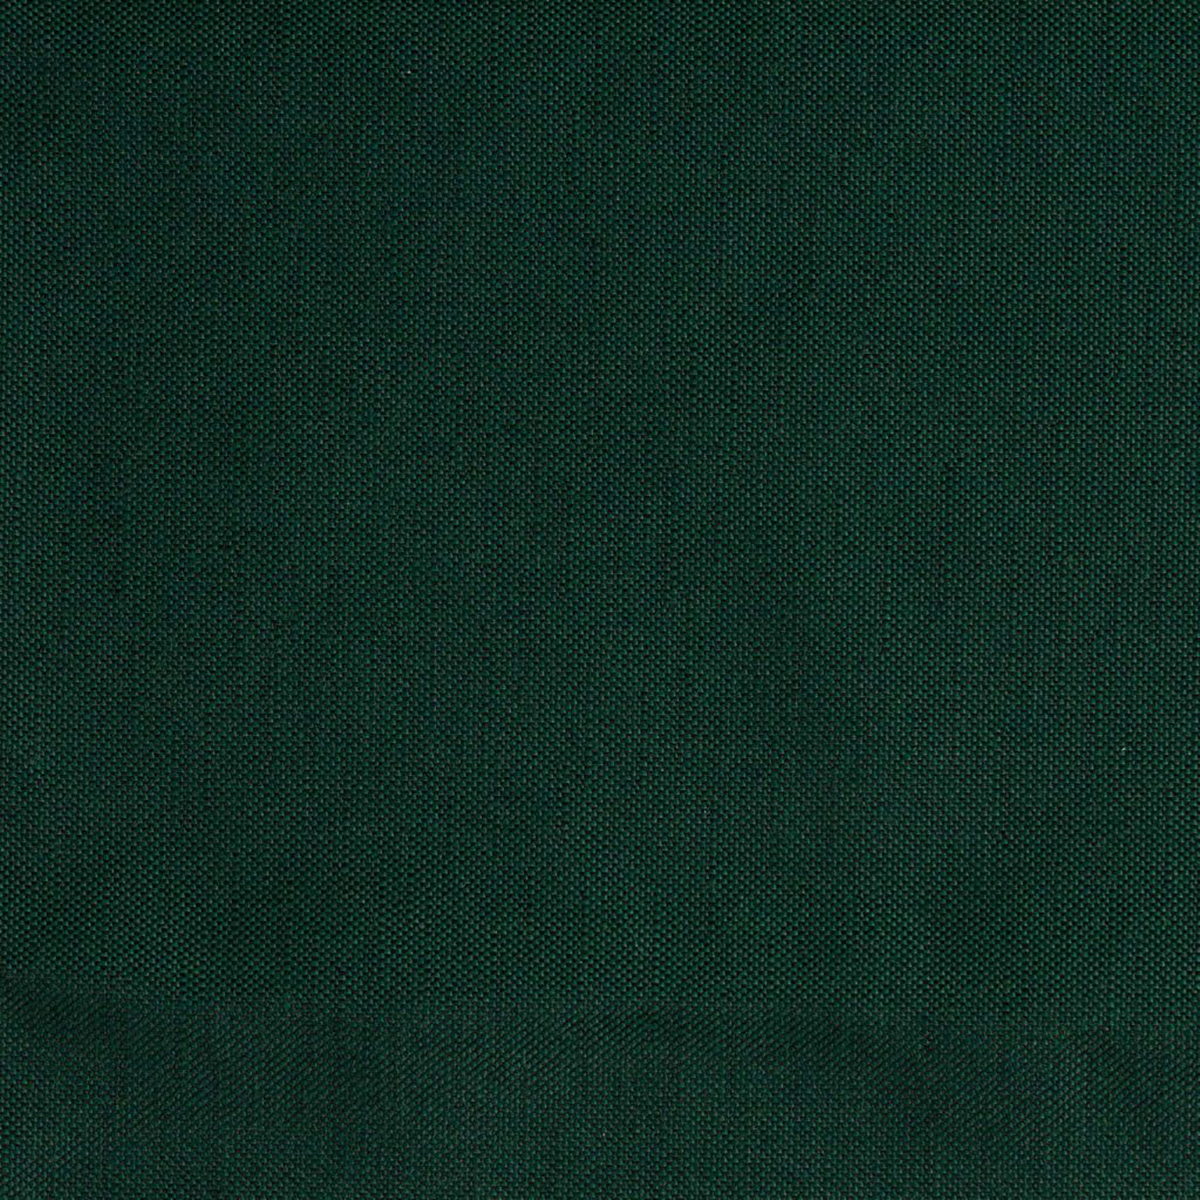 linen mallard dark cushion for croquet teak ottoman thumbnail image